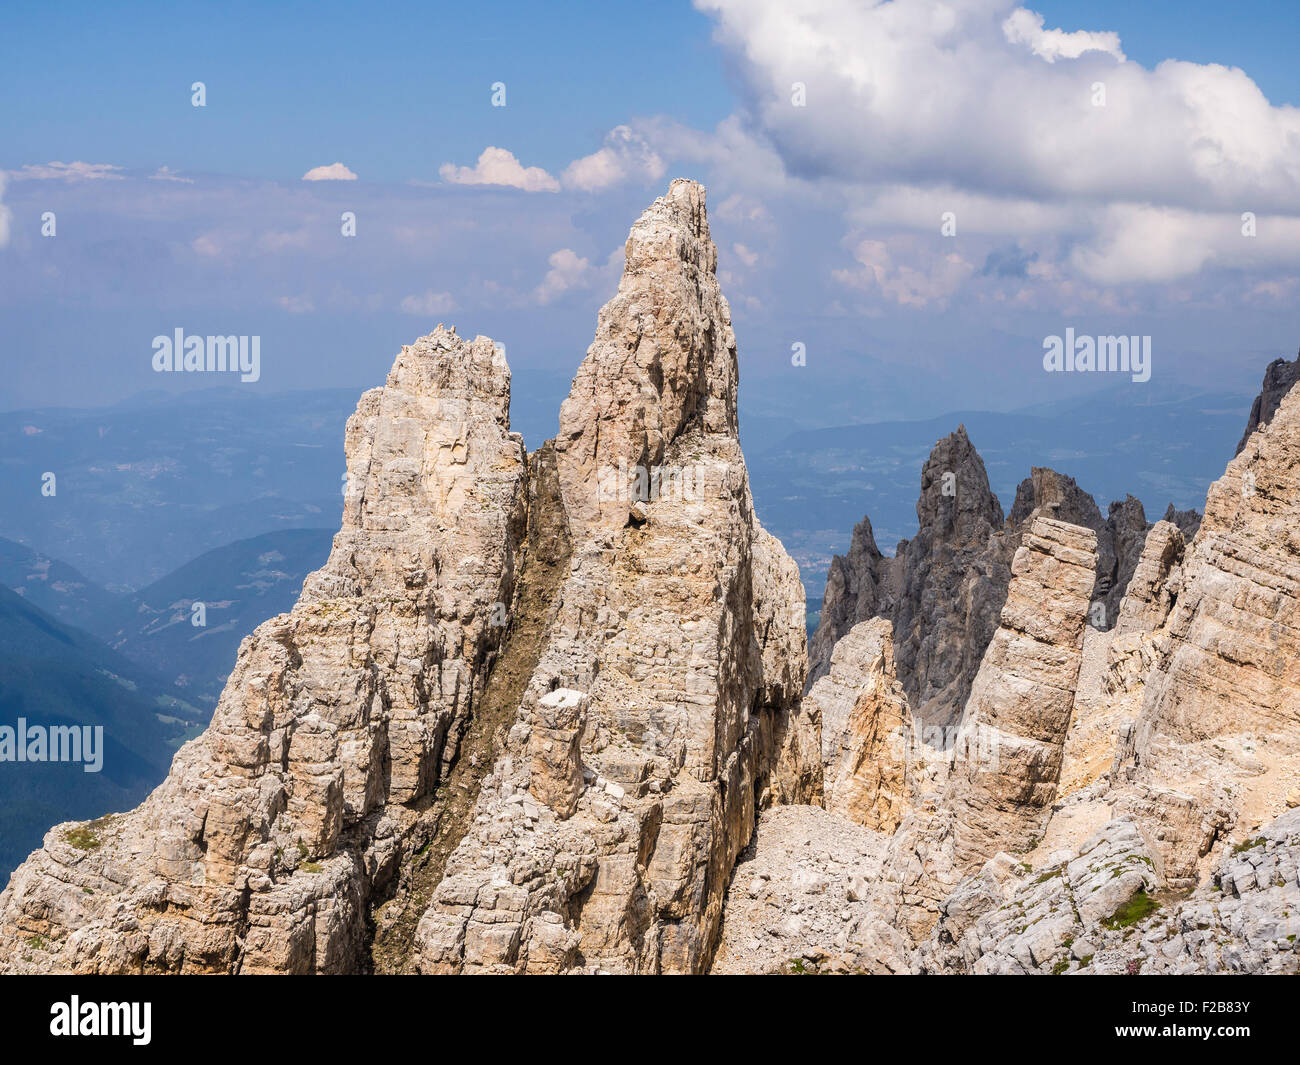 The Pisa rock formation, Latemar montain group, near rifugio torre di Pisa, dolomites, Italy Stock Photo